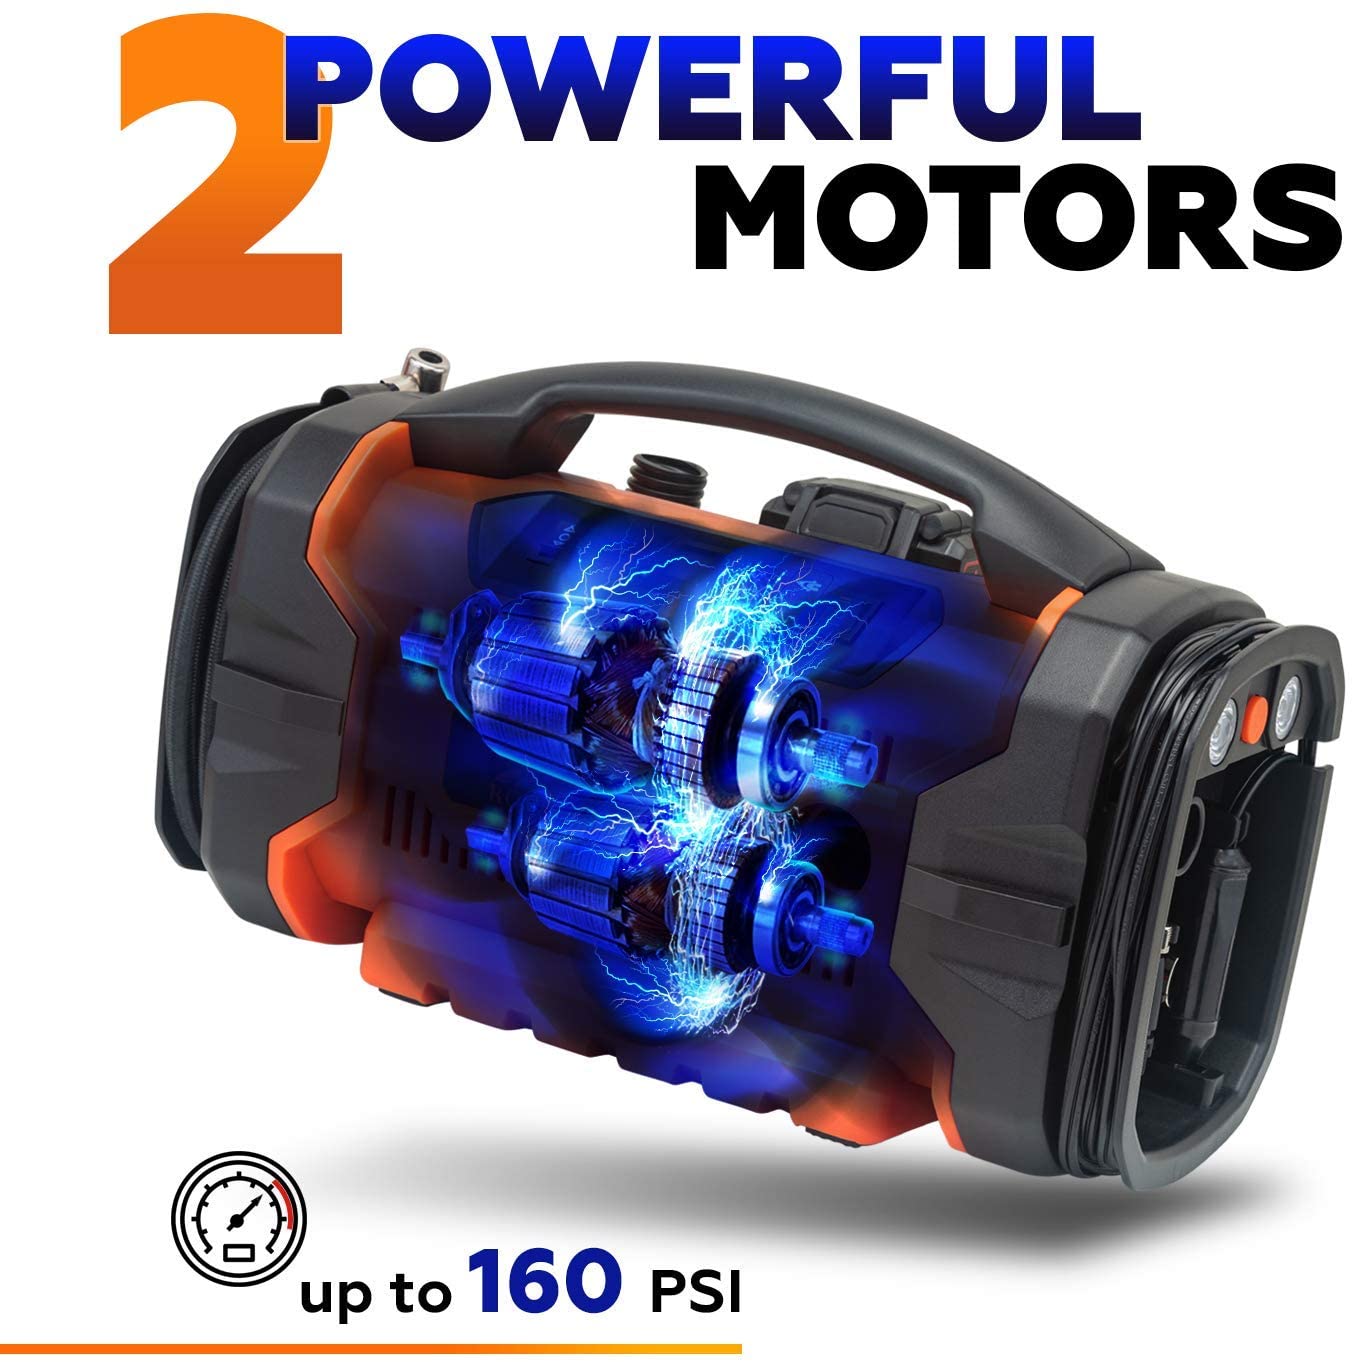 12v Portable Air Compressor For Car Tire Air Pump Inflator - Airzox™ 2.0